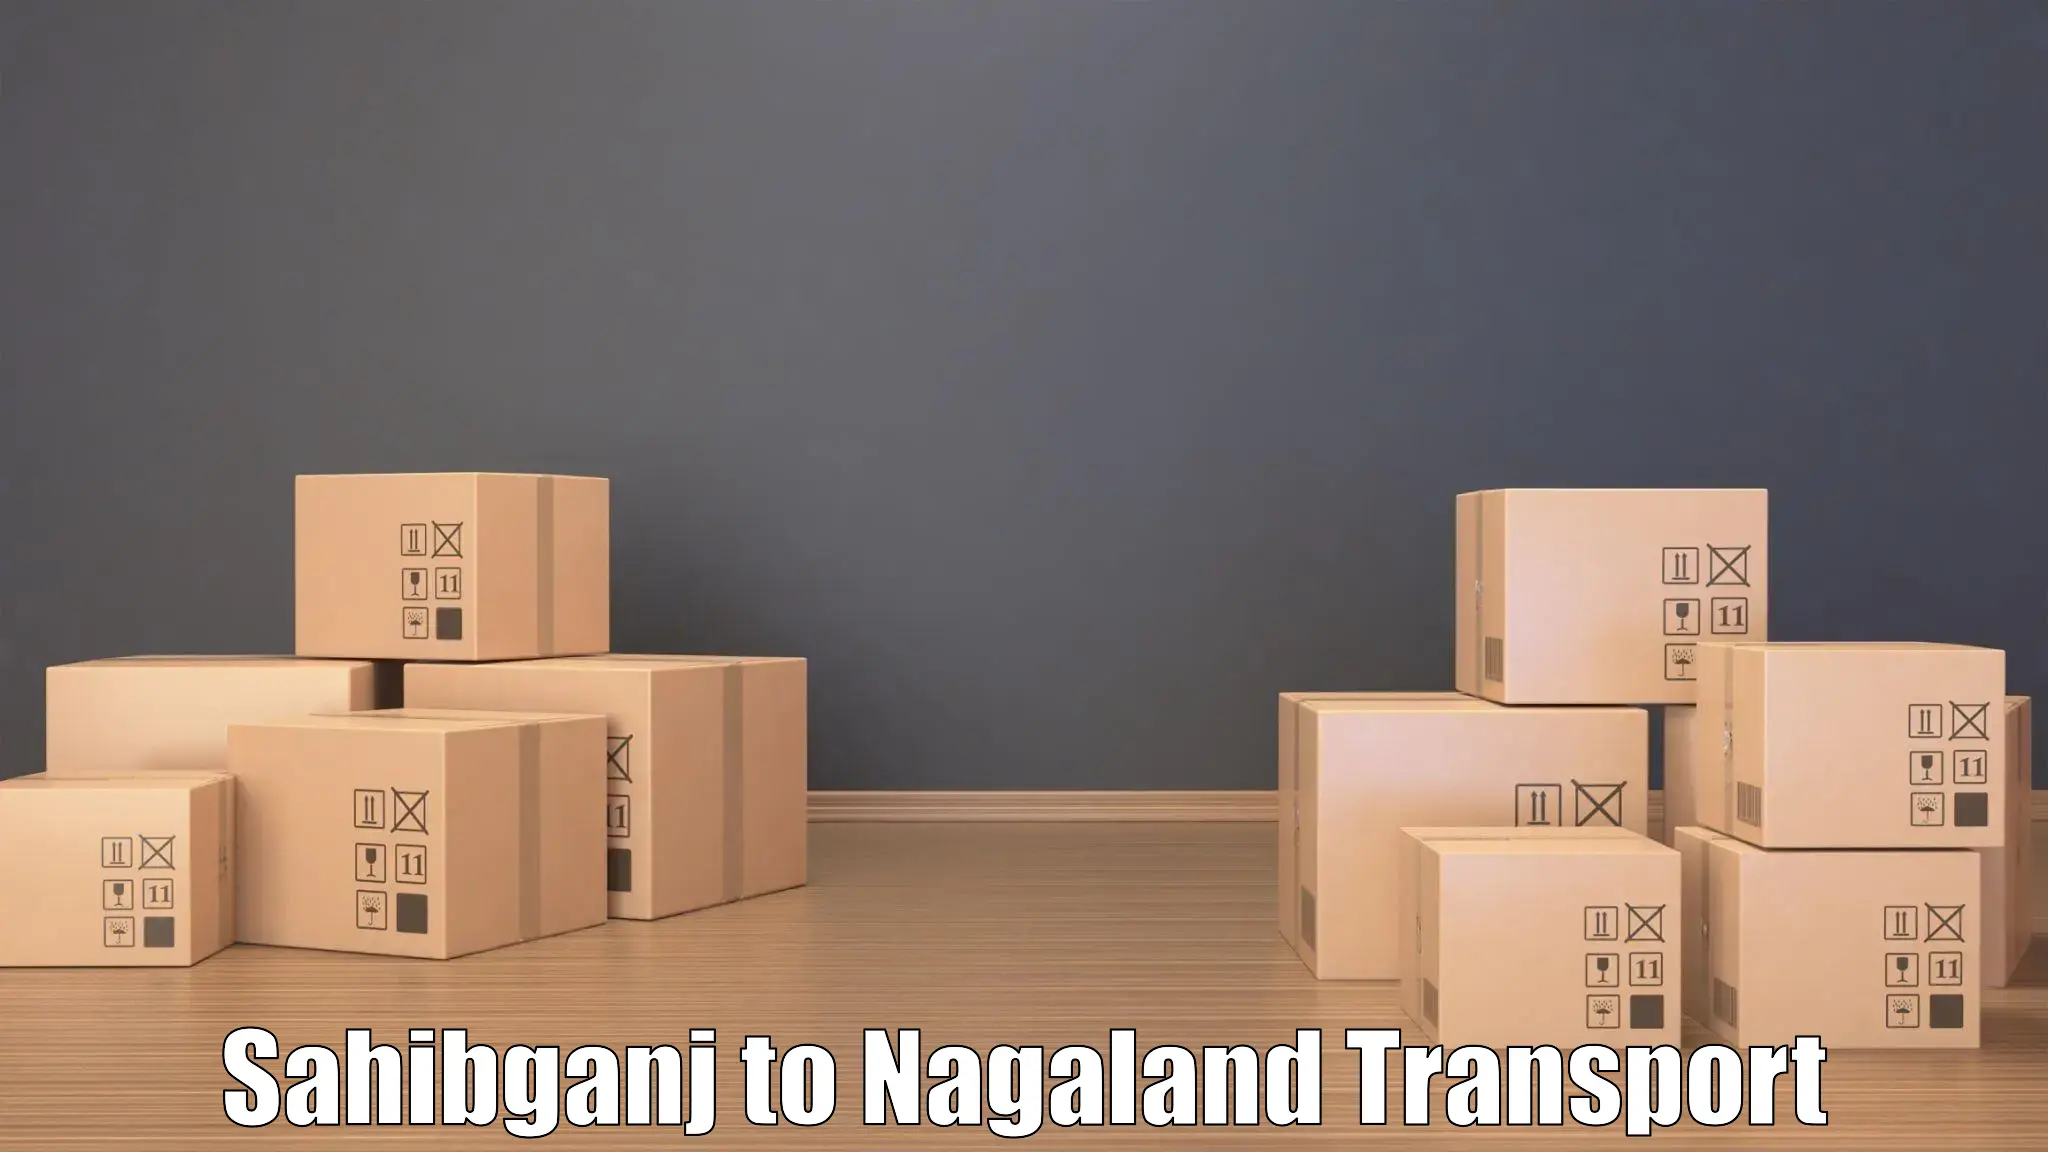 Sending bike to another city Sahibganj to Nagaland